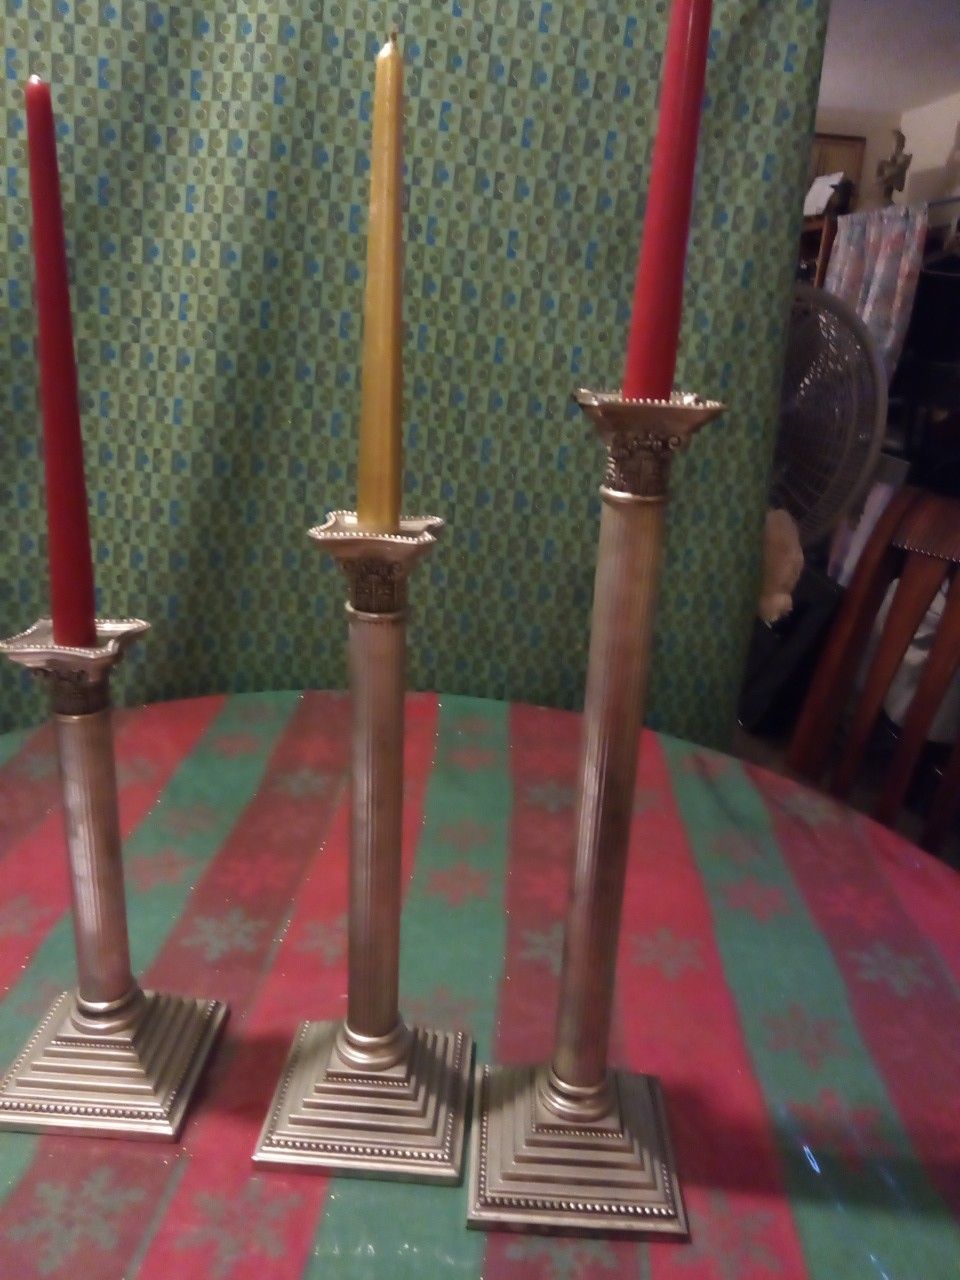 3 Godinger candleholder